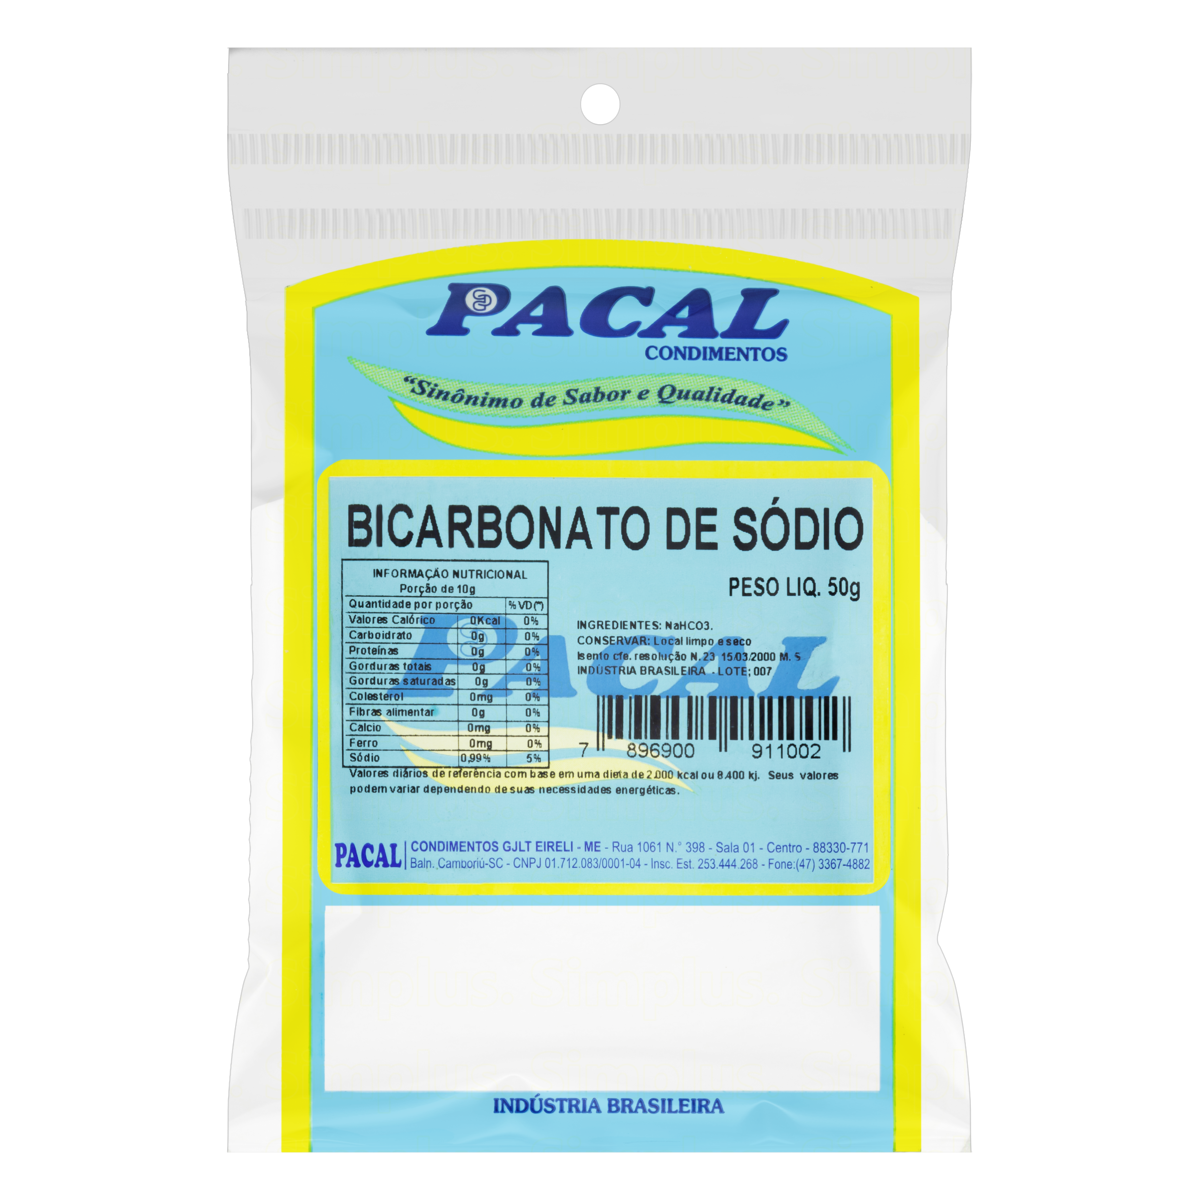 7896900911002 - BICARBONATO DE SÓDIO PACAL PACOTE 50G